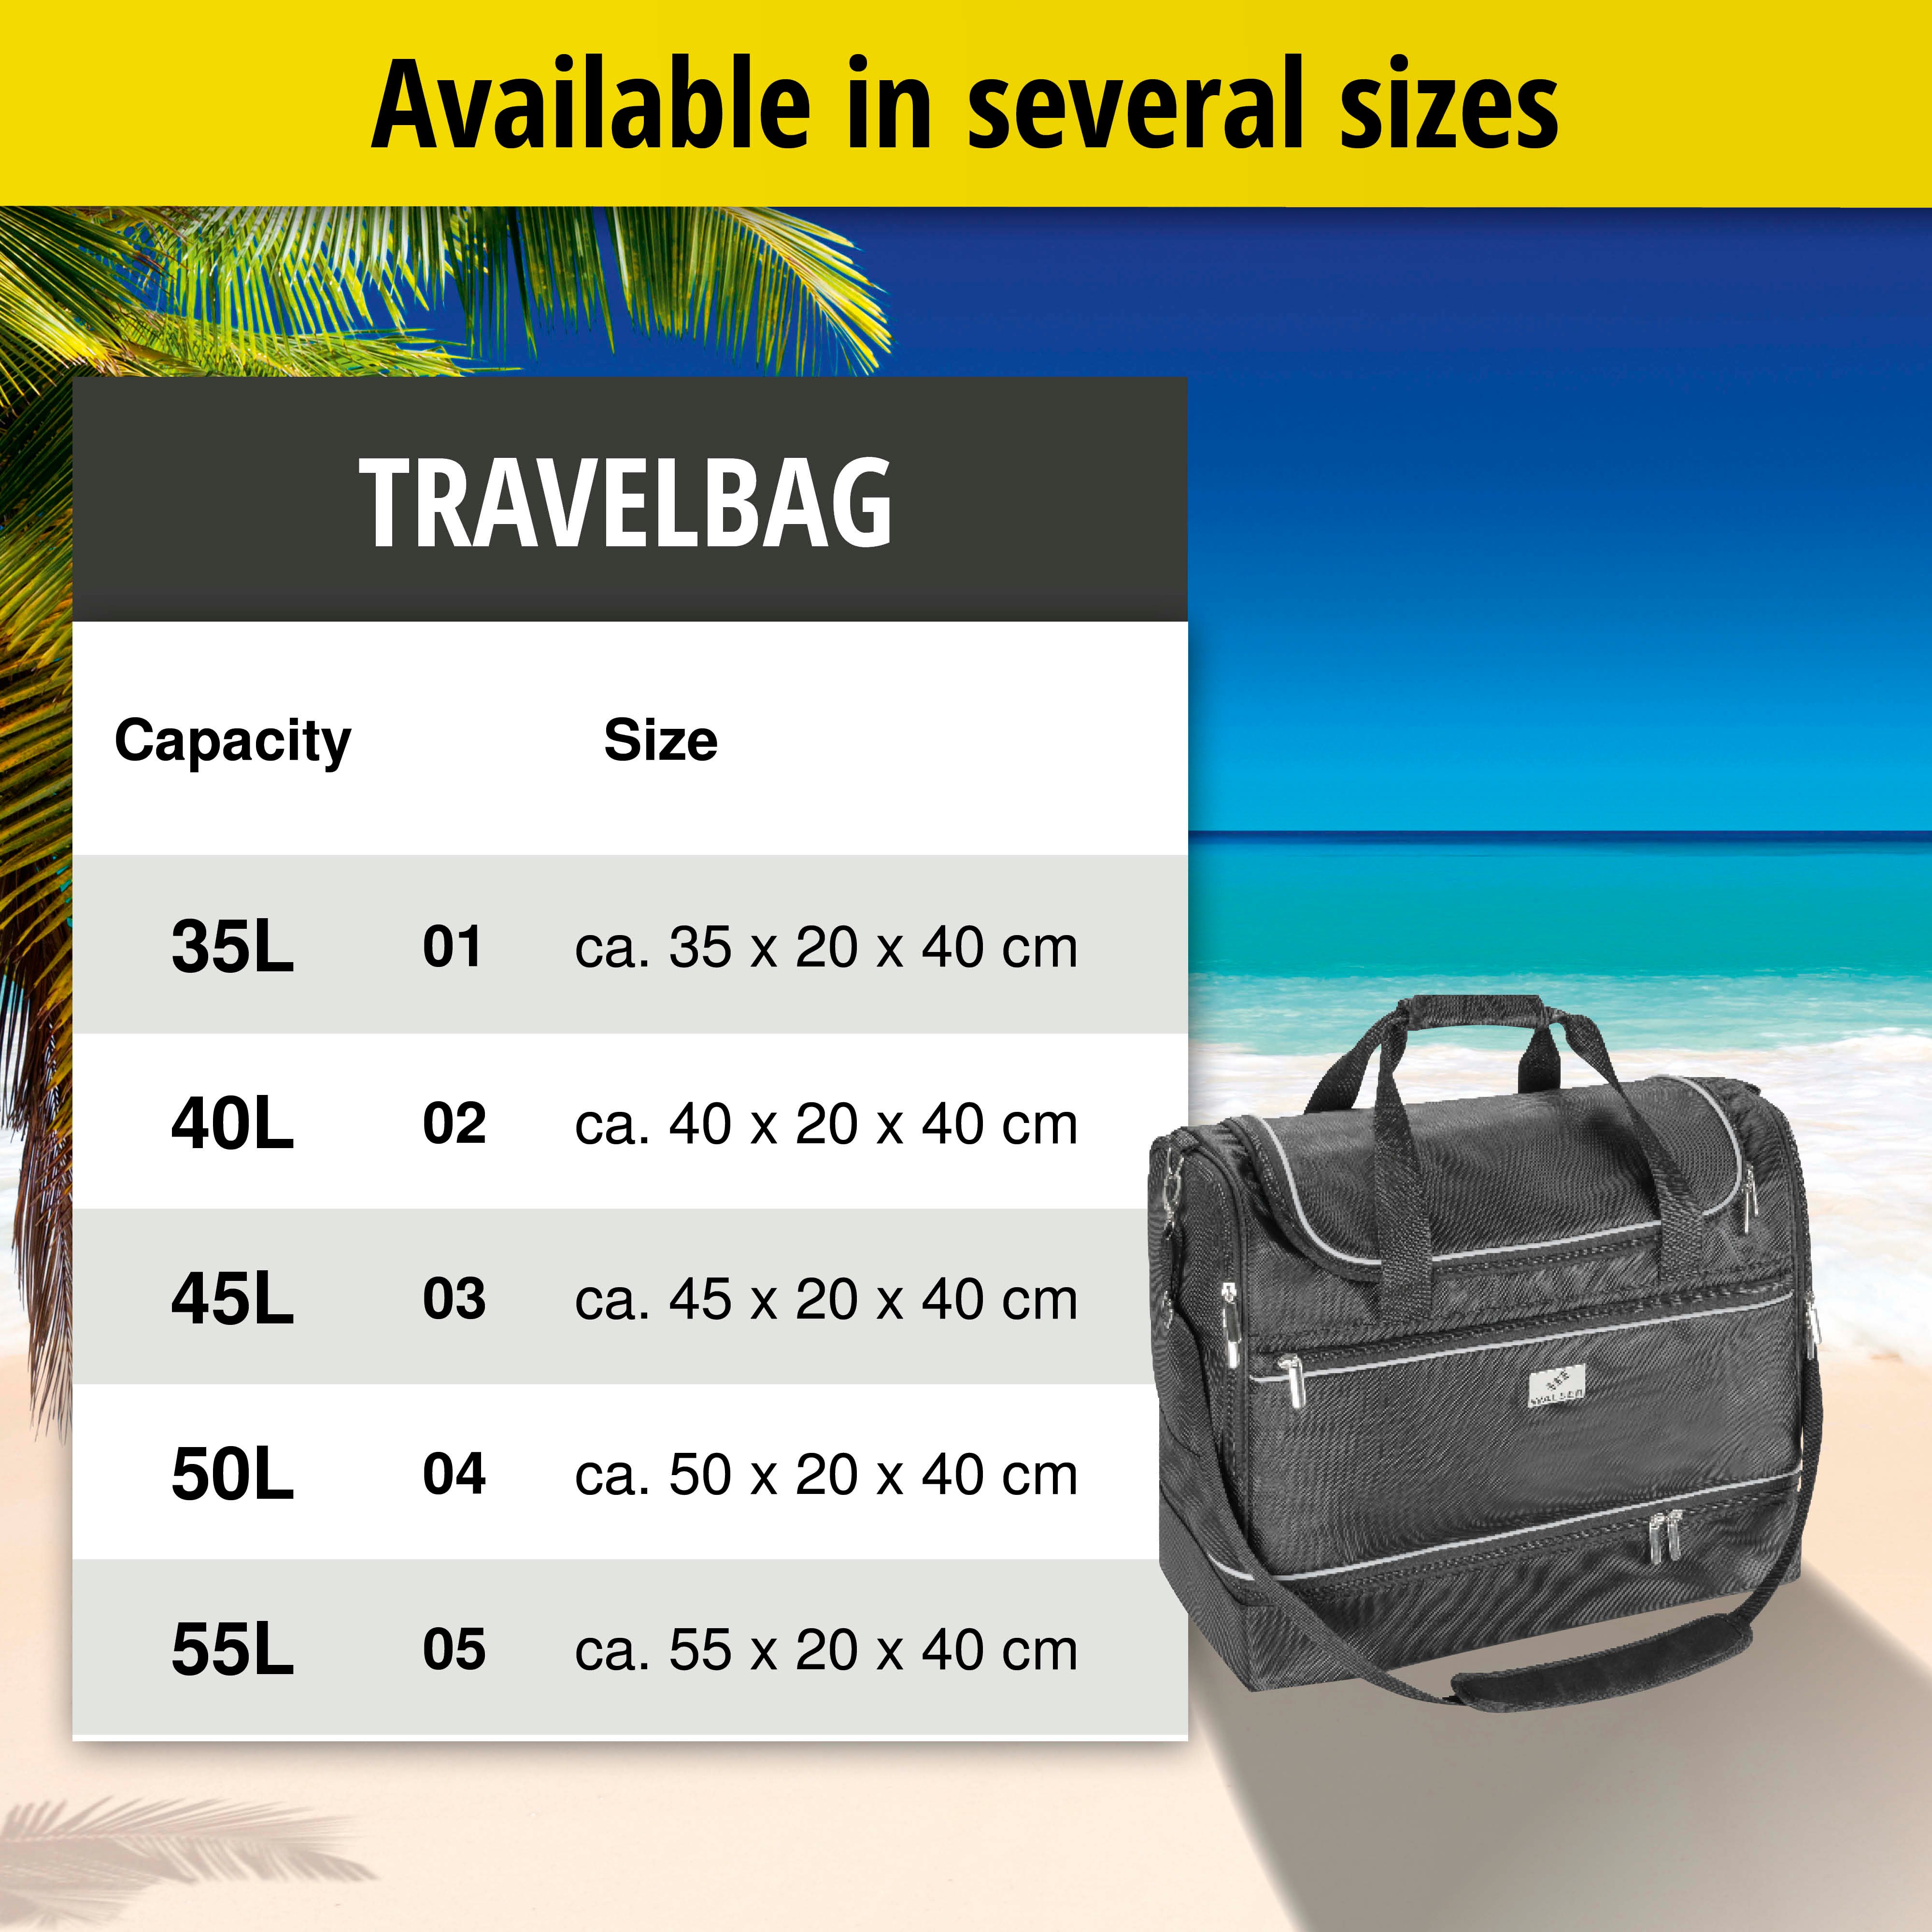 Carbags travel bag 50L - 50x20x40cm